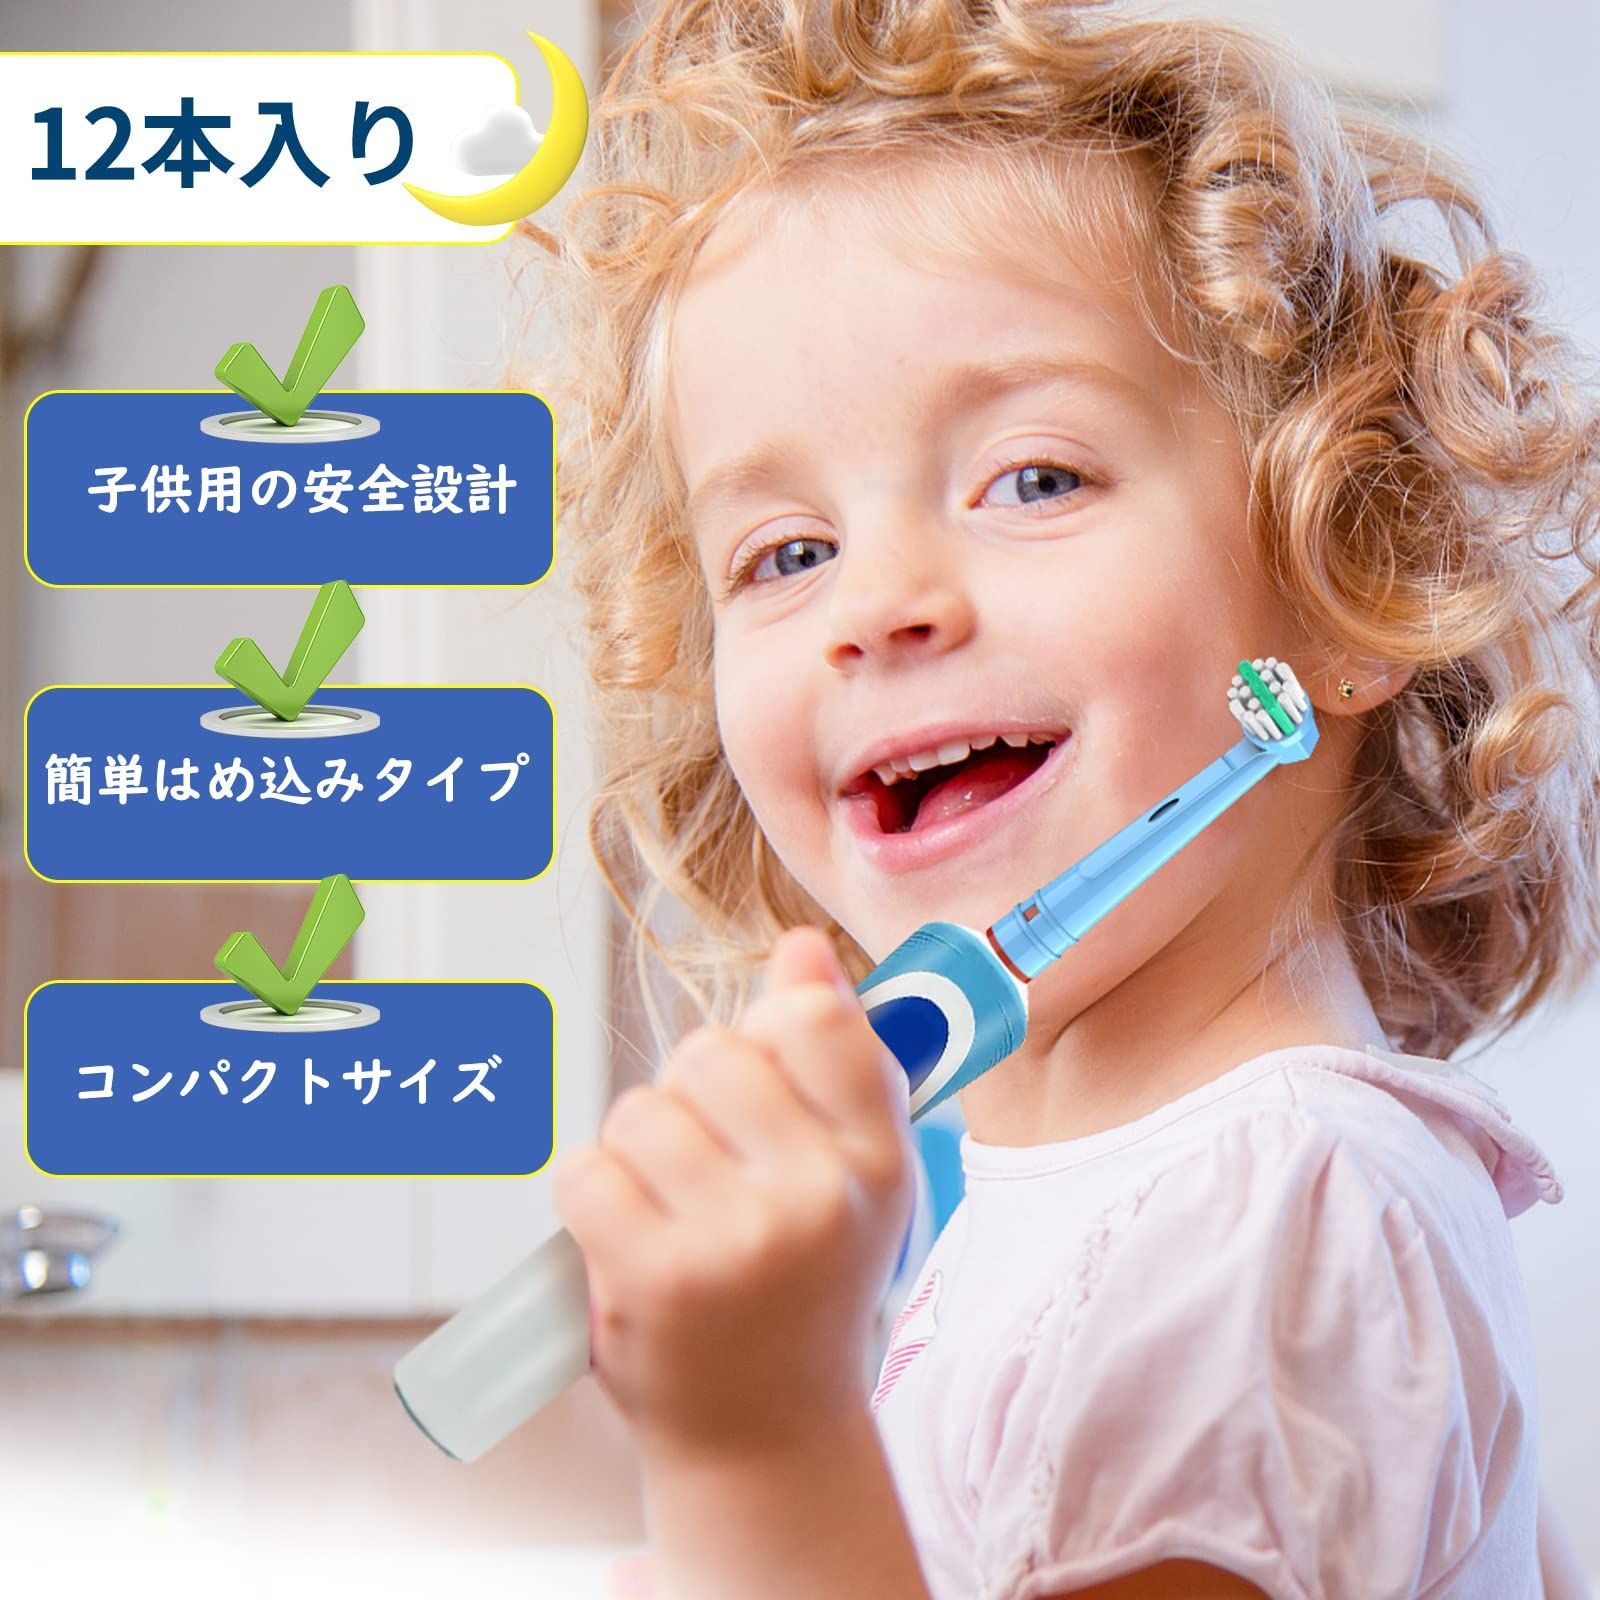 Oral-B オーラルb オーラルB オーラルビー電動歯ブラシ iO4 - 電動歯ブラシ